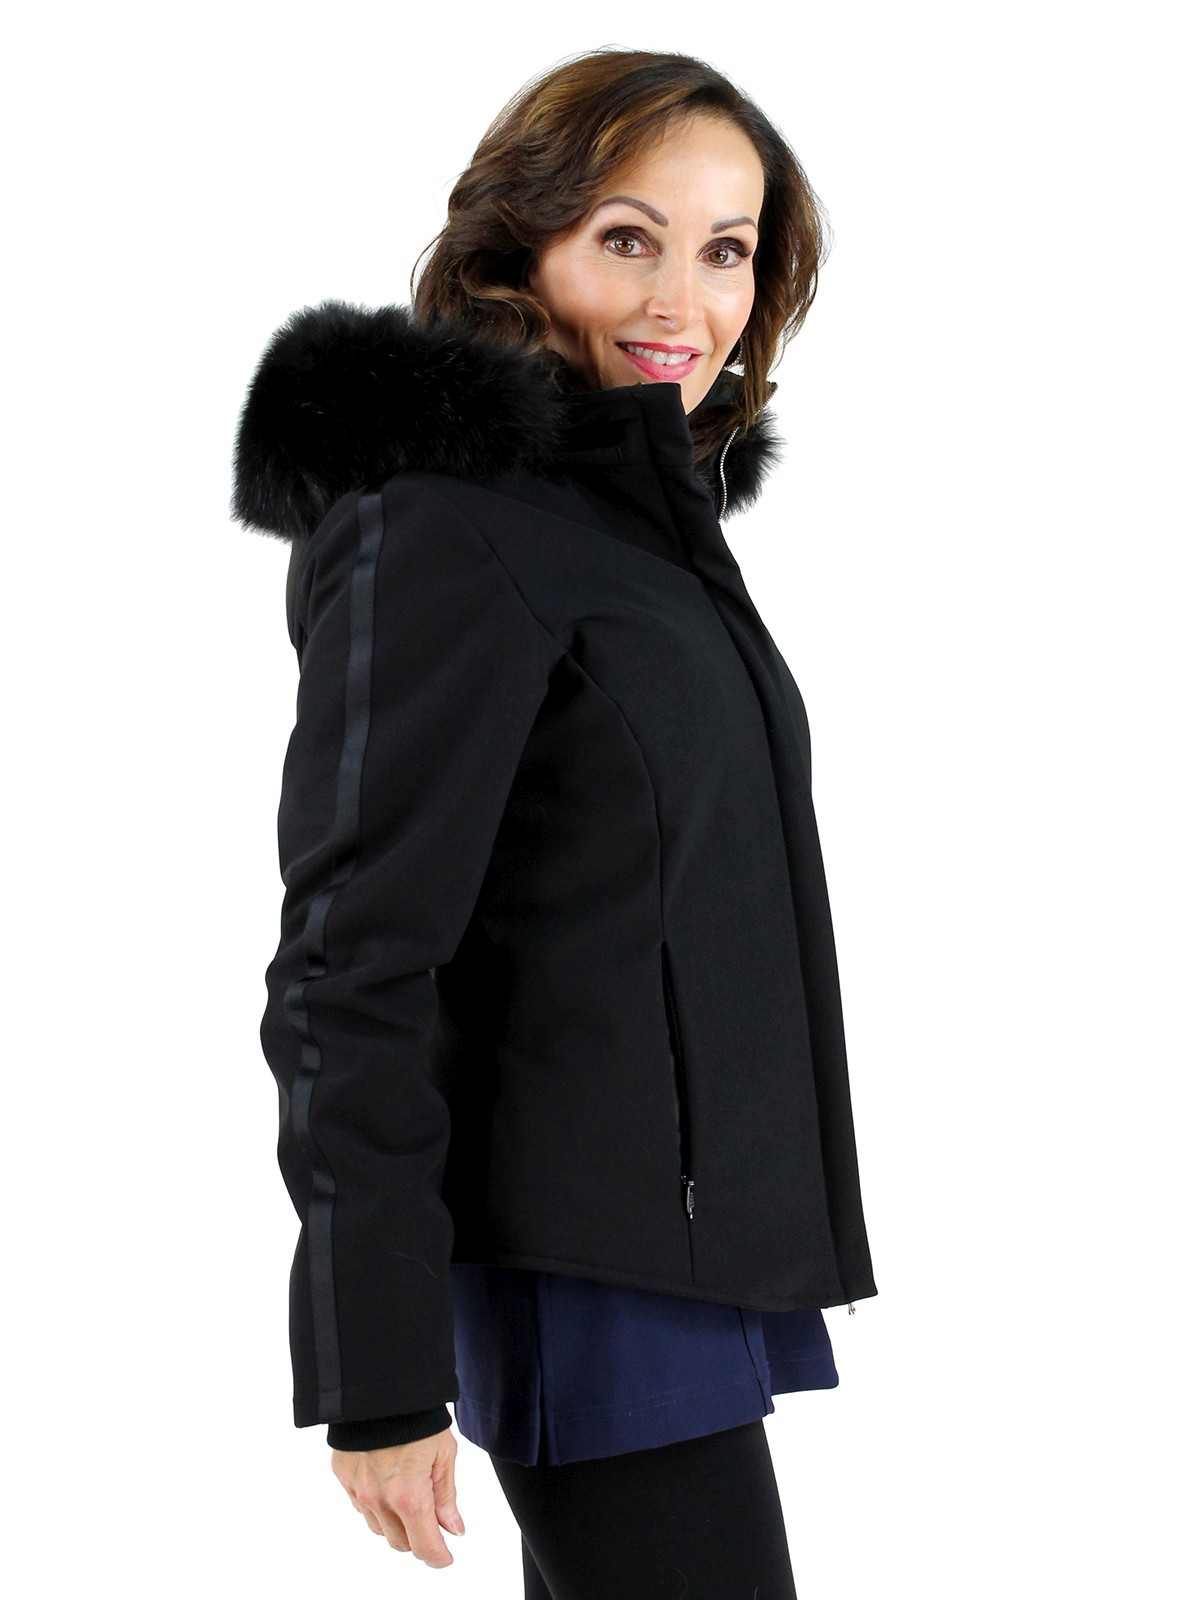 Black Fabric Ski Jacket with Fox Hood - Women's Medium | Day Furs